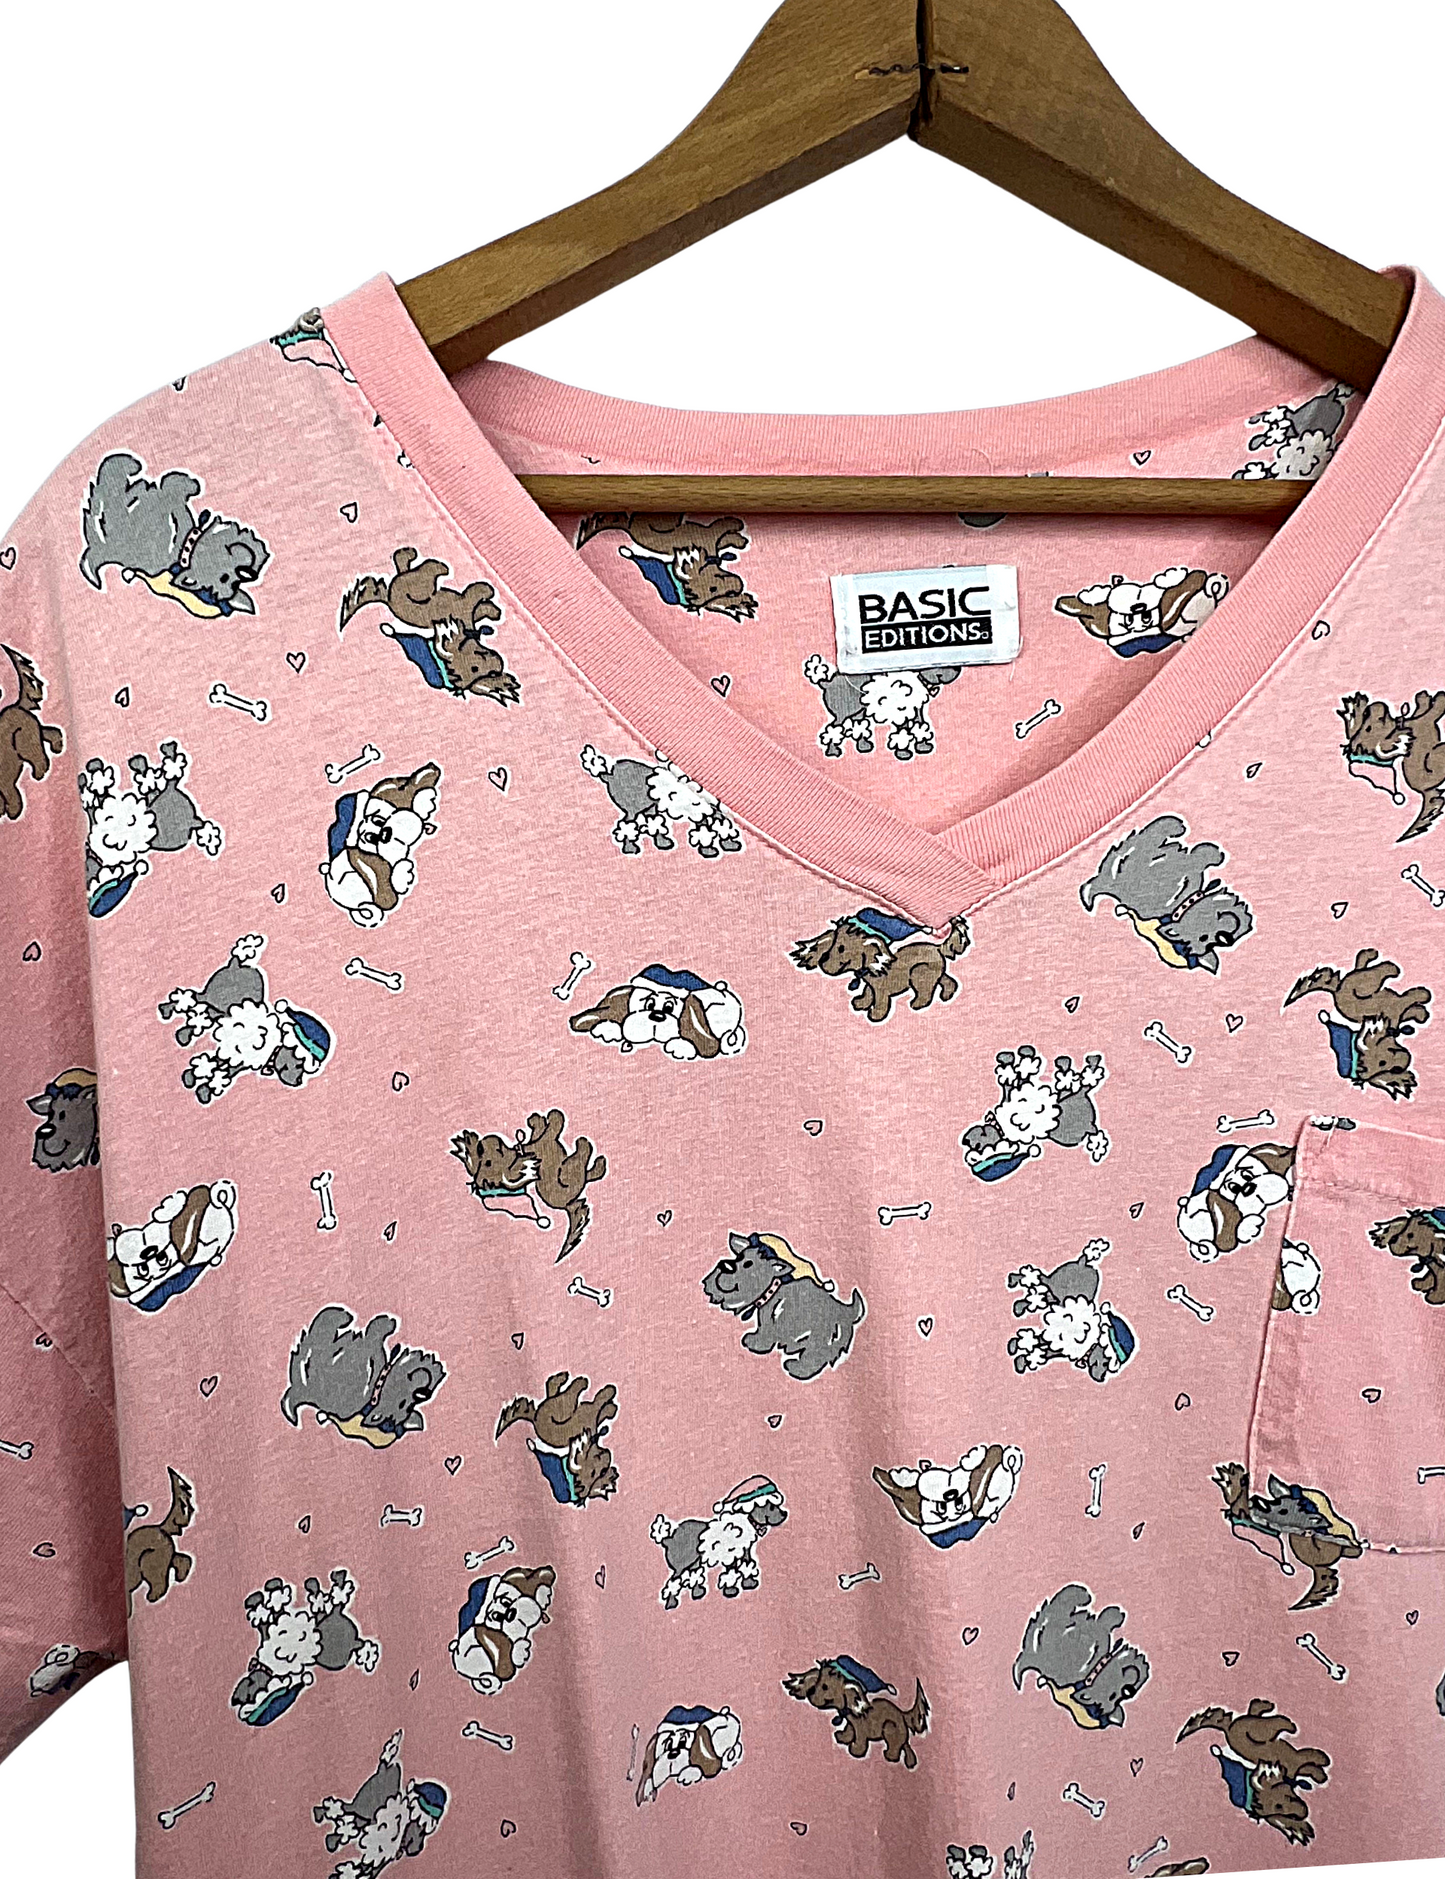 90’s All Over Pink Puppy Dog 100% Cotton Short Sleeve Sleep Night Shirt